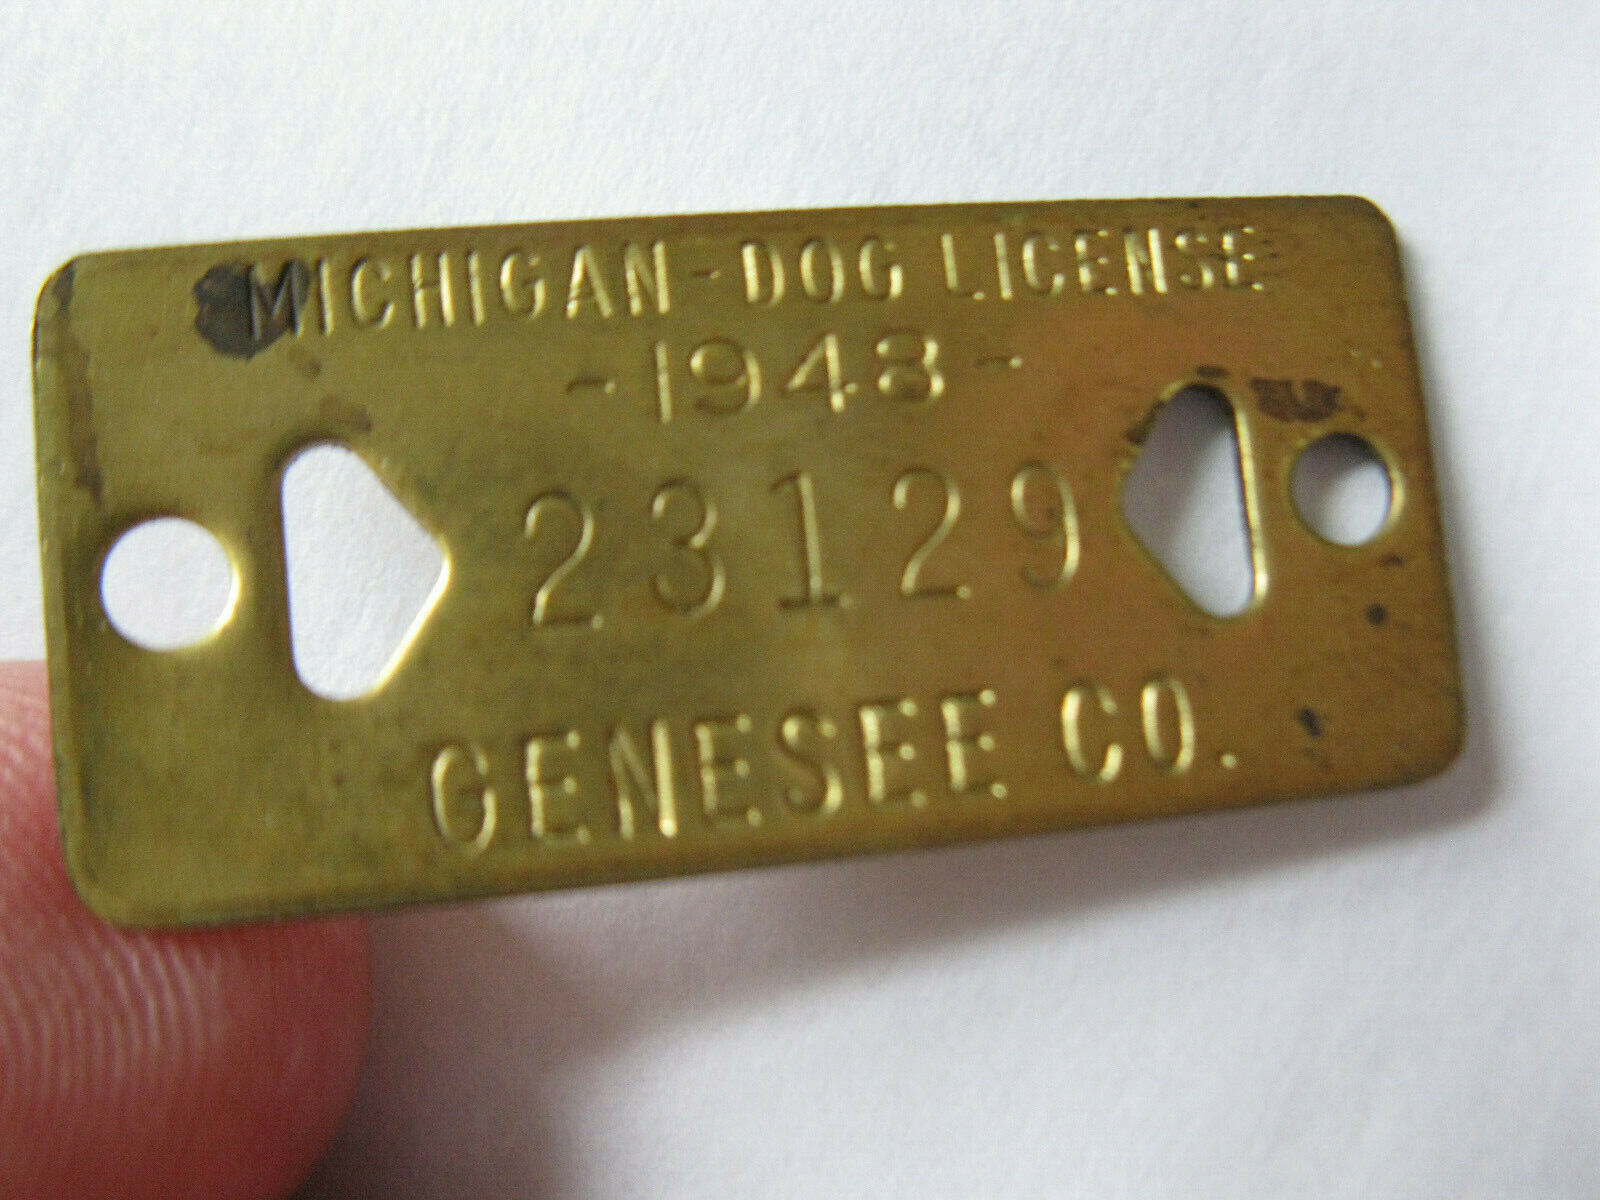 Vintage 1948 Geness Co. Michigan Dog License Tag Metal